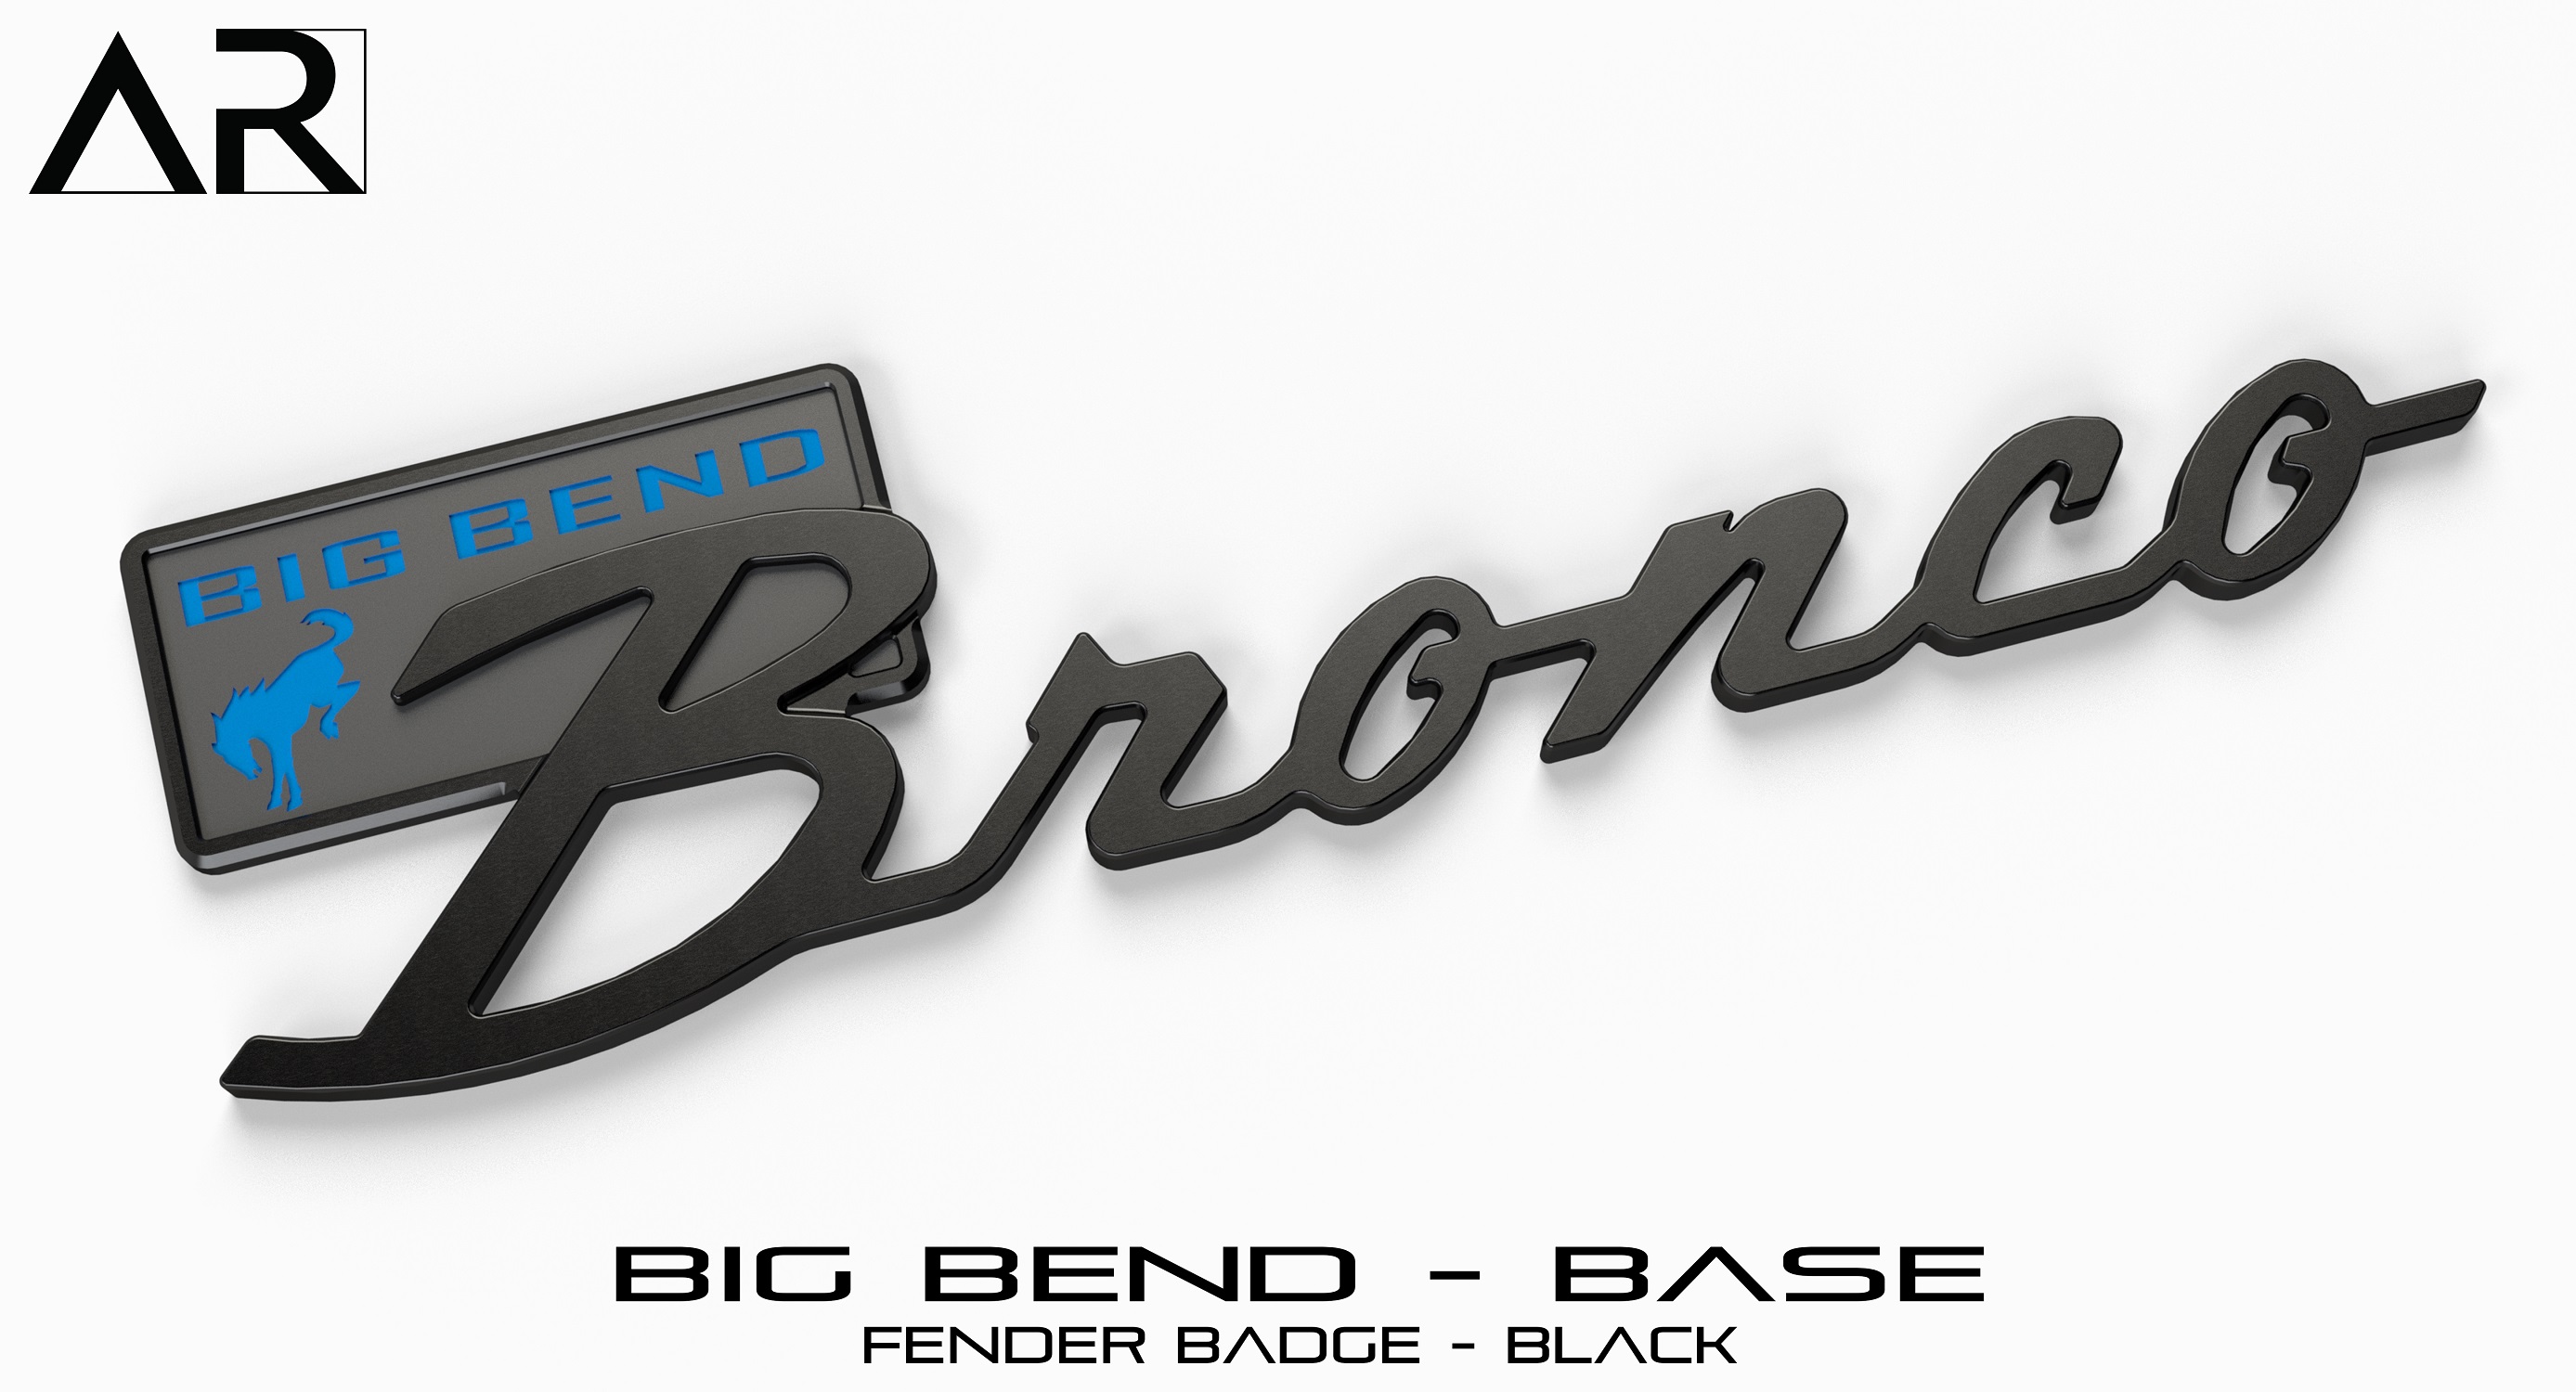 1601007_B  - Fender Badge  - Big Bend Base - Black.jpg